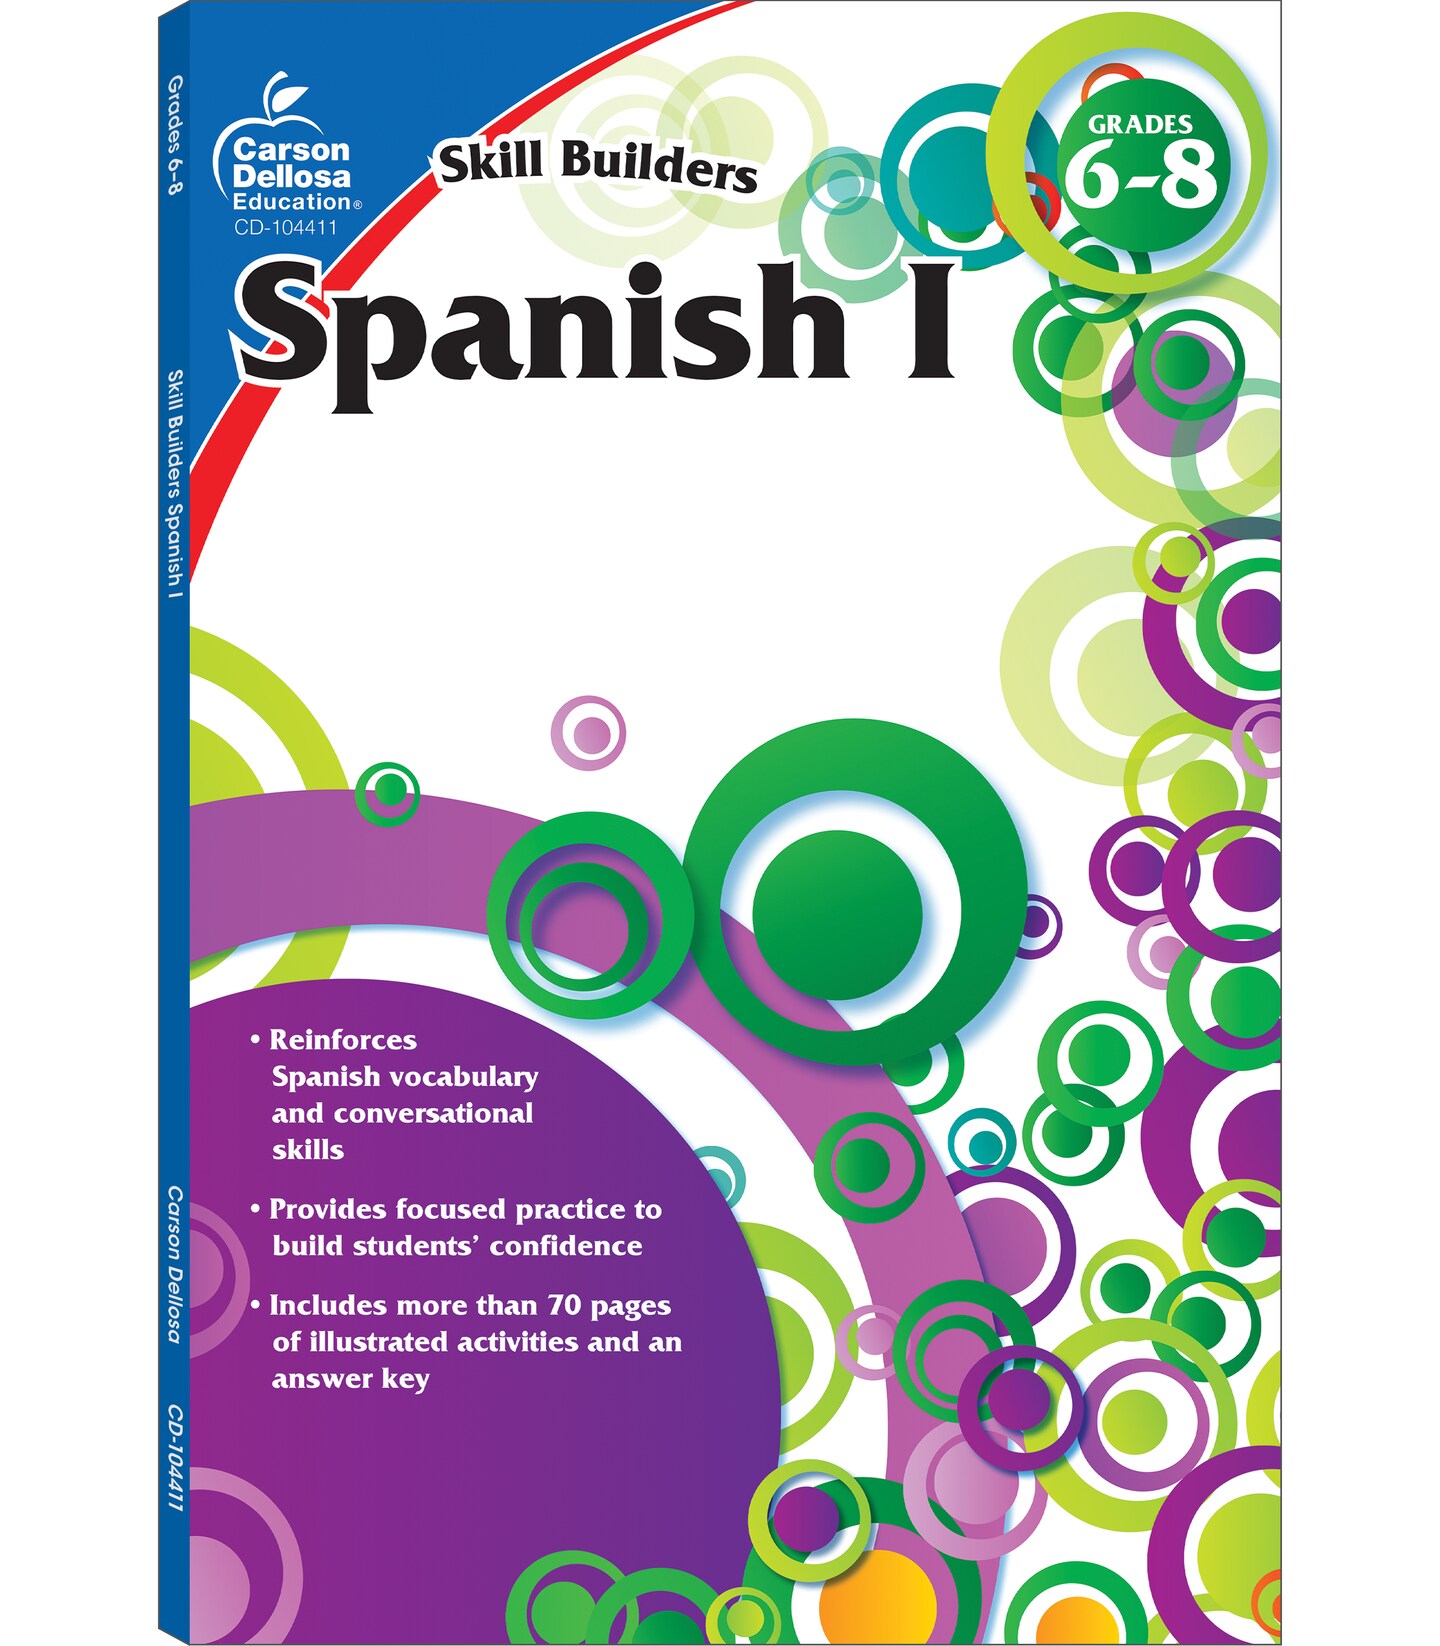 Carson Dellosa Skill Builders Spanish Workbook for Kids Grades 6-8, Spanish Vocabulary Builder for Kids Ages 11-14, 6th, 7th, and 8th Grade Spanish Workbook, Learn Spanish Phrases, Questions &#x26; More